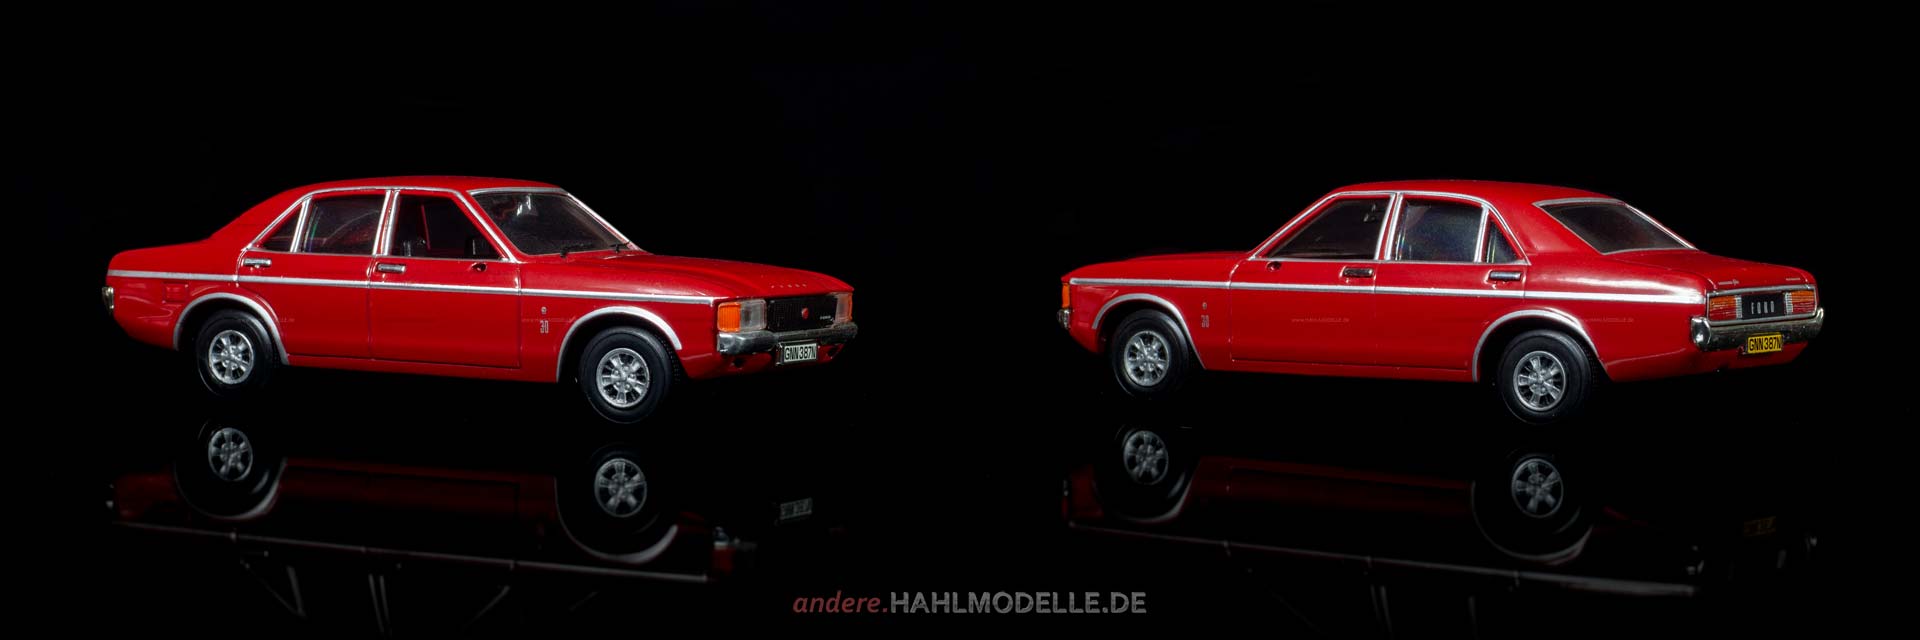 Ford Granada Mk. I | Limousine | Lledo | 1:43 | www.andere.hahlmodelle.de